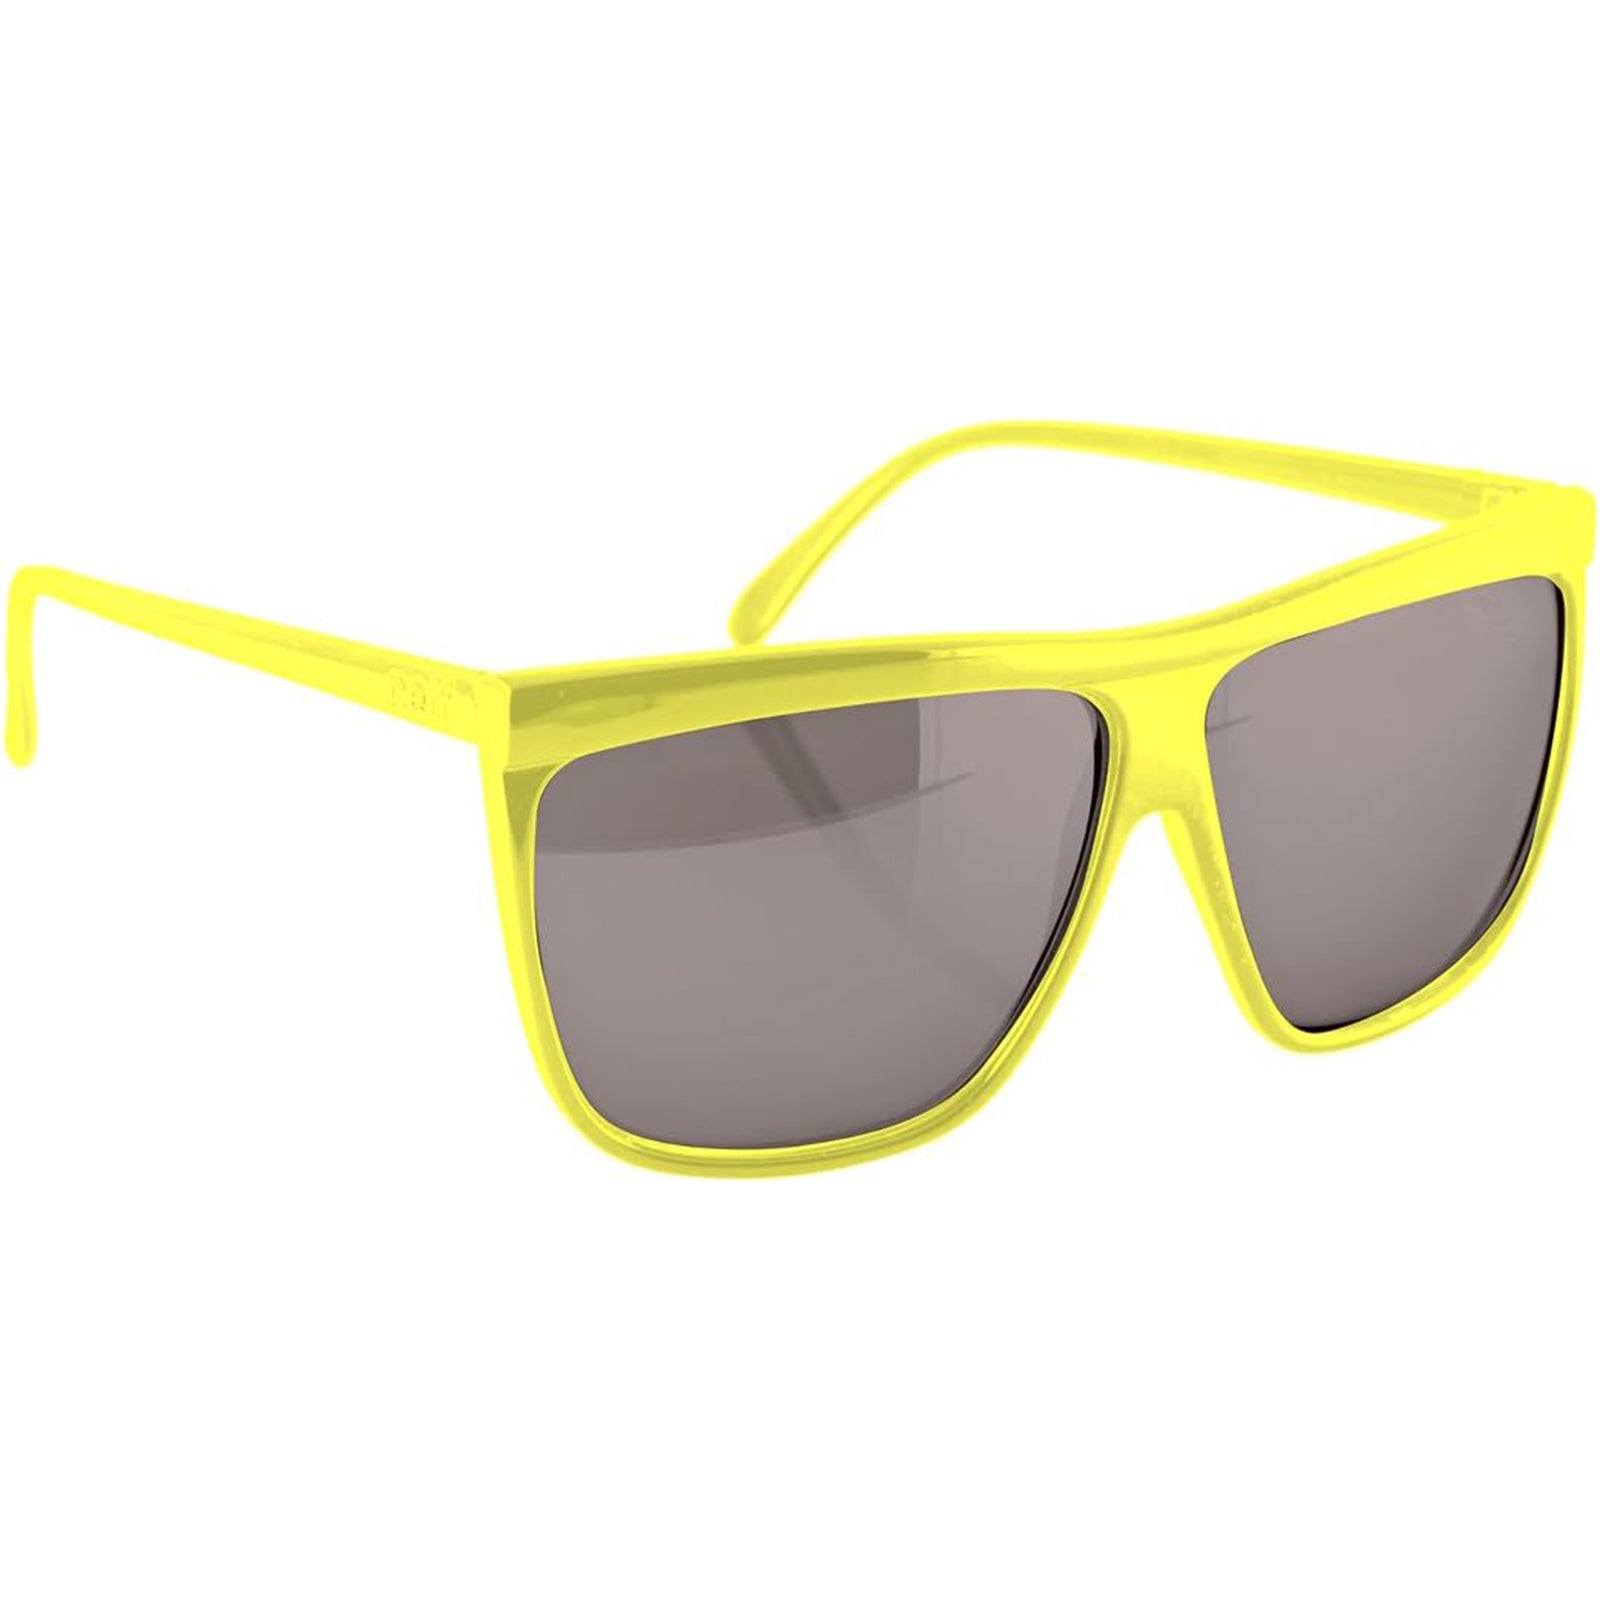 Neff Brow Adult Lifestyle Sunglasses-SS14121